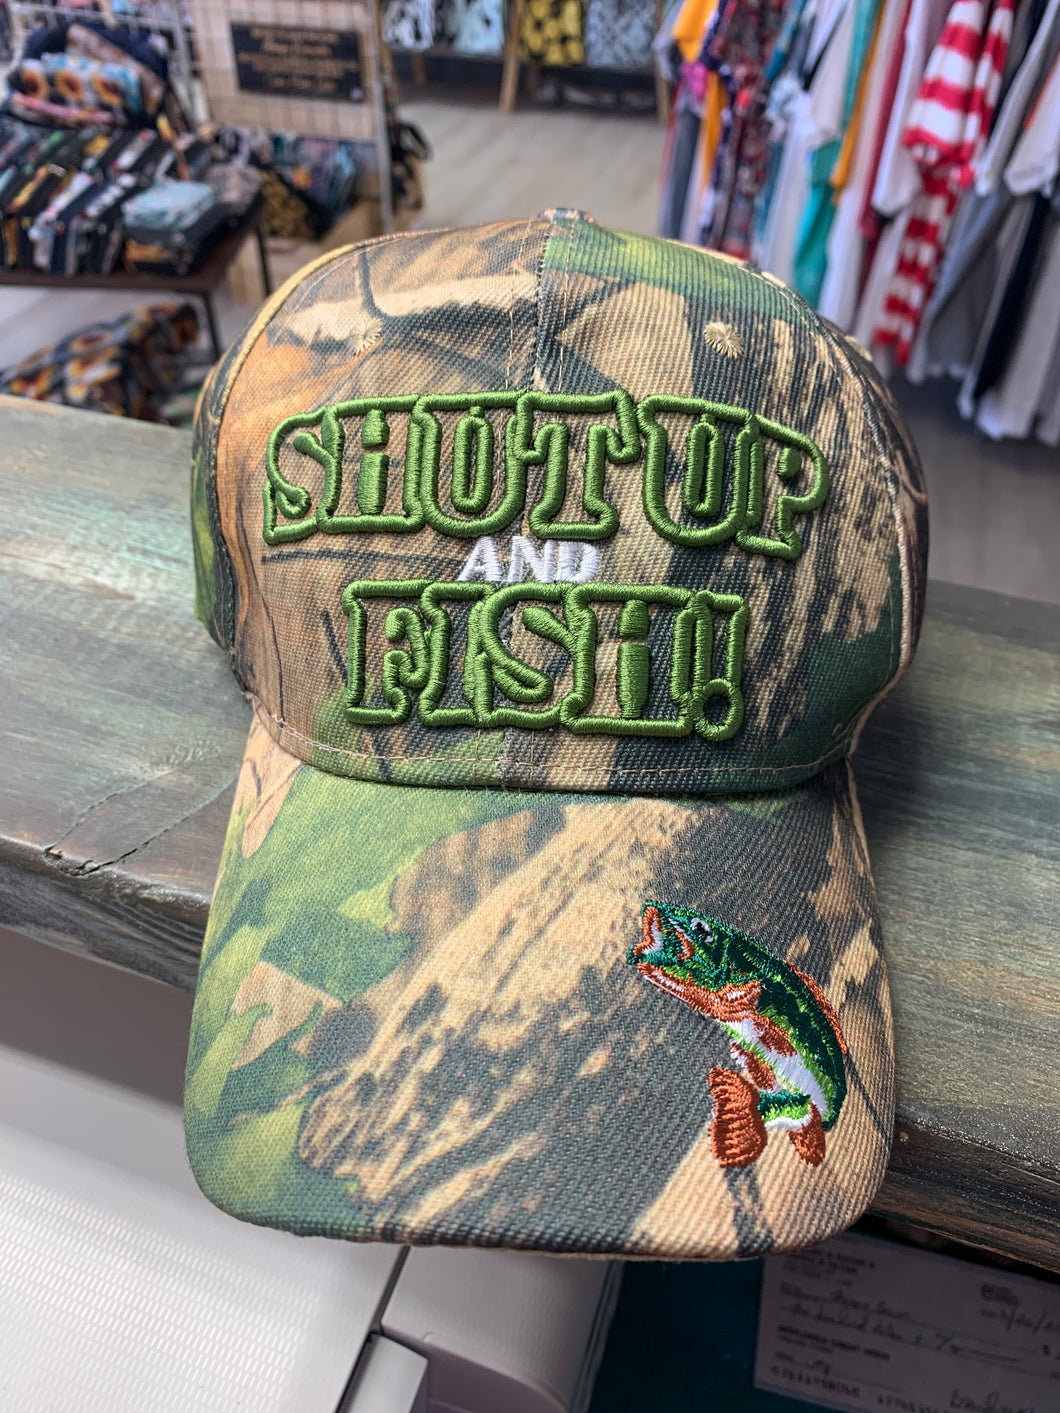 Shut up and fish baseball hat